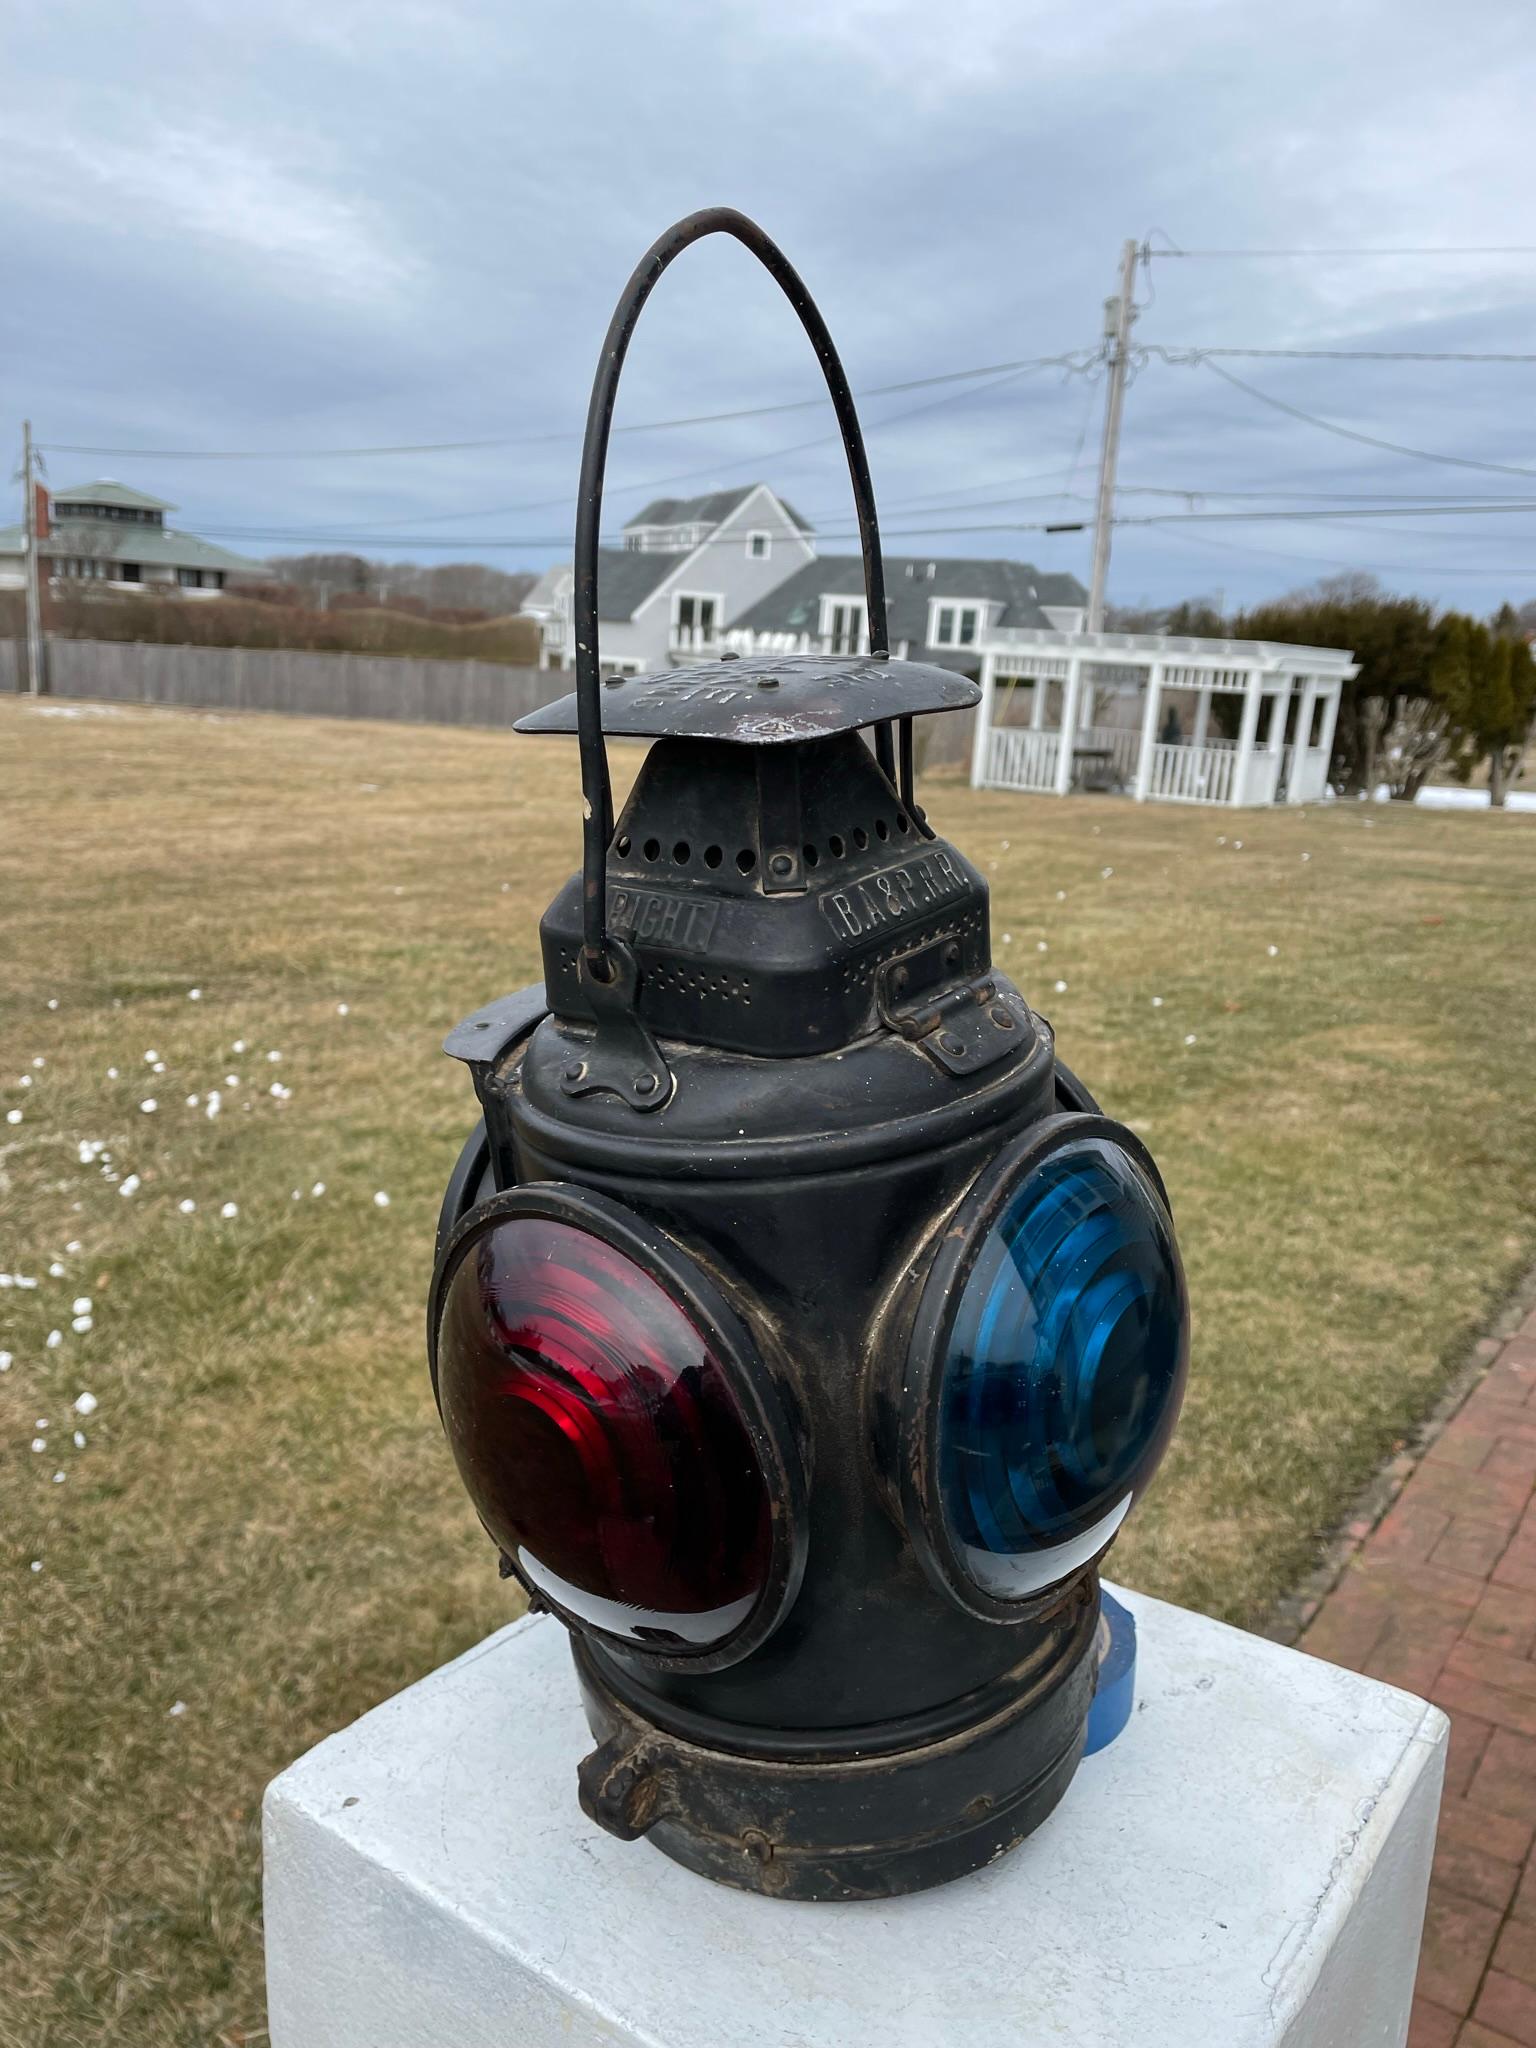 Extraordinary American Adlake Railroad Signal Lighting Lantern 8